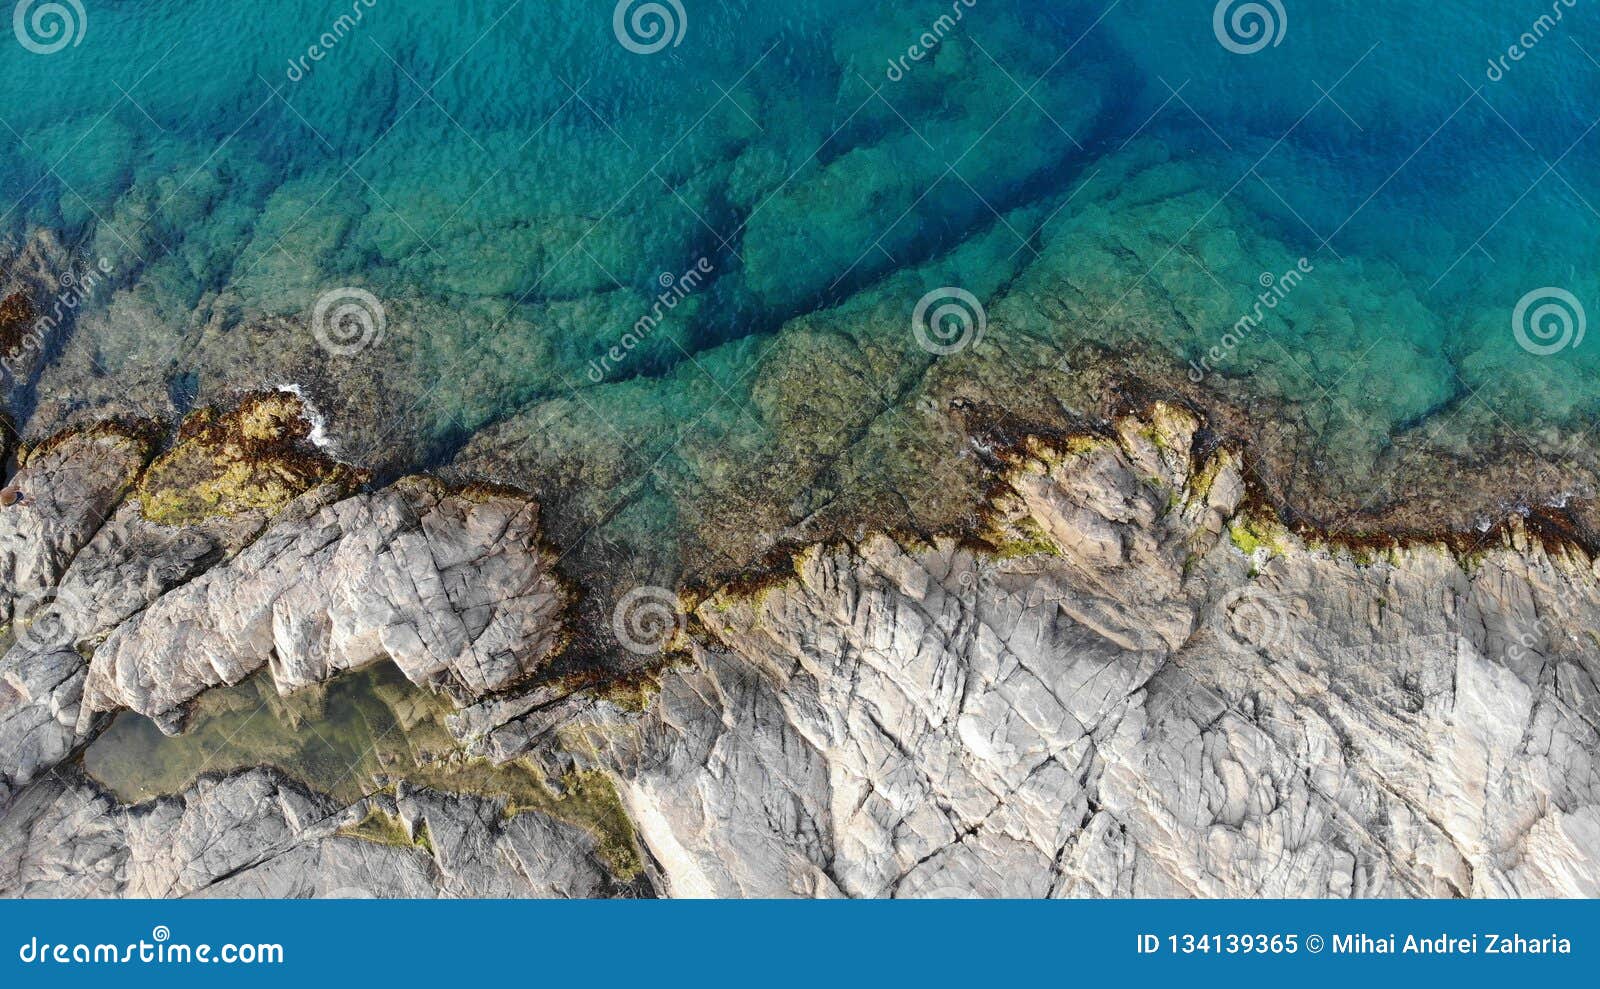 panorama - tossa de mar, spain, turqoise water